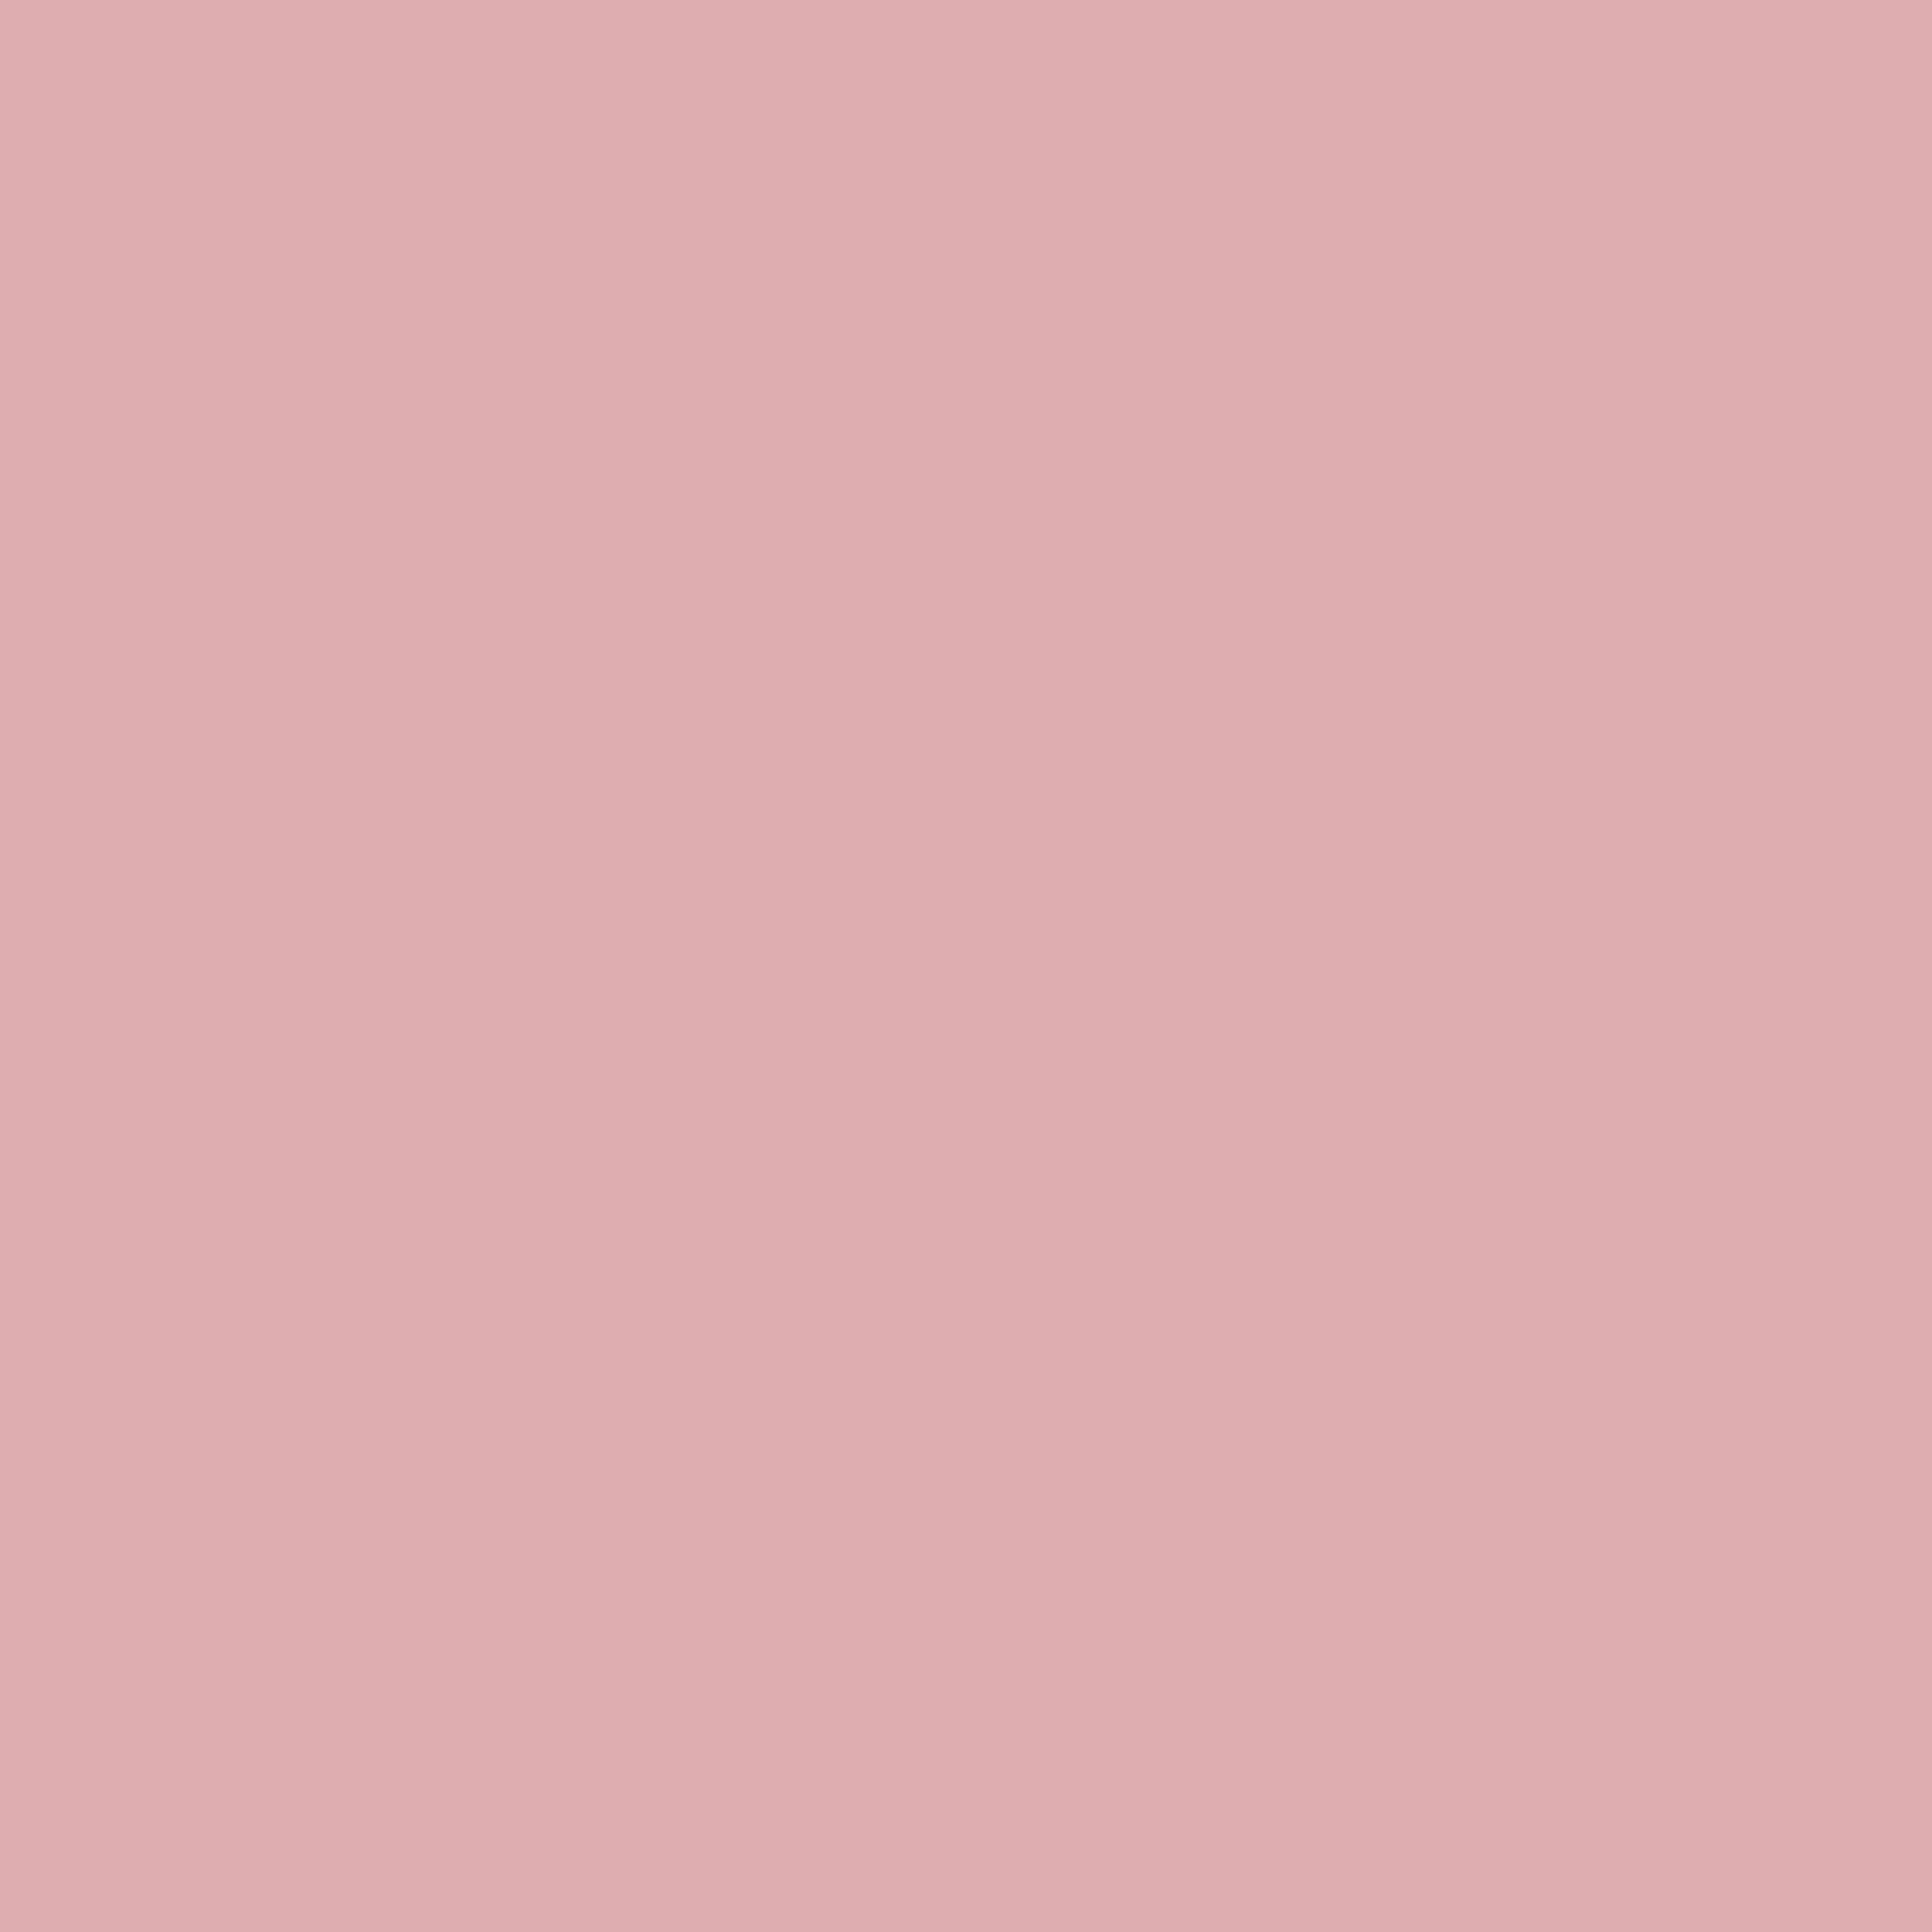 2732x2732 Pale Chestnut Solid Color Background